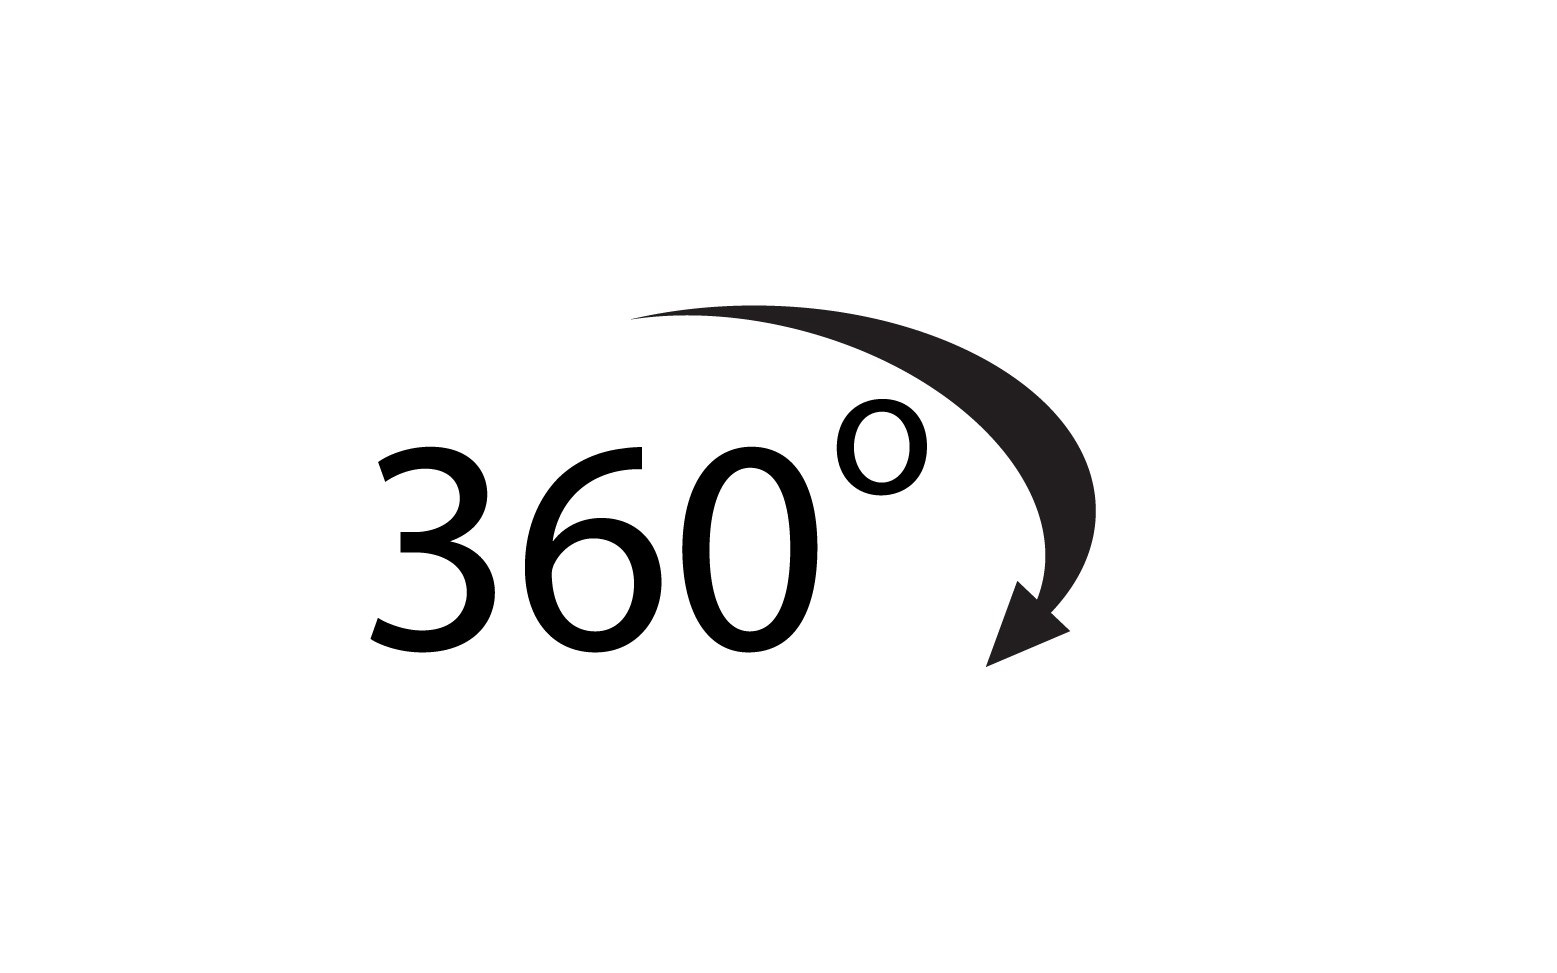 360 degree angle rotation icon symbol logo version v32